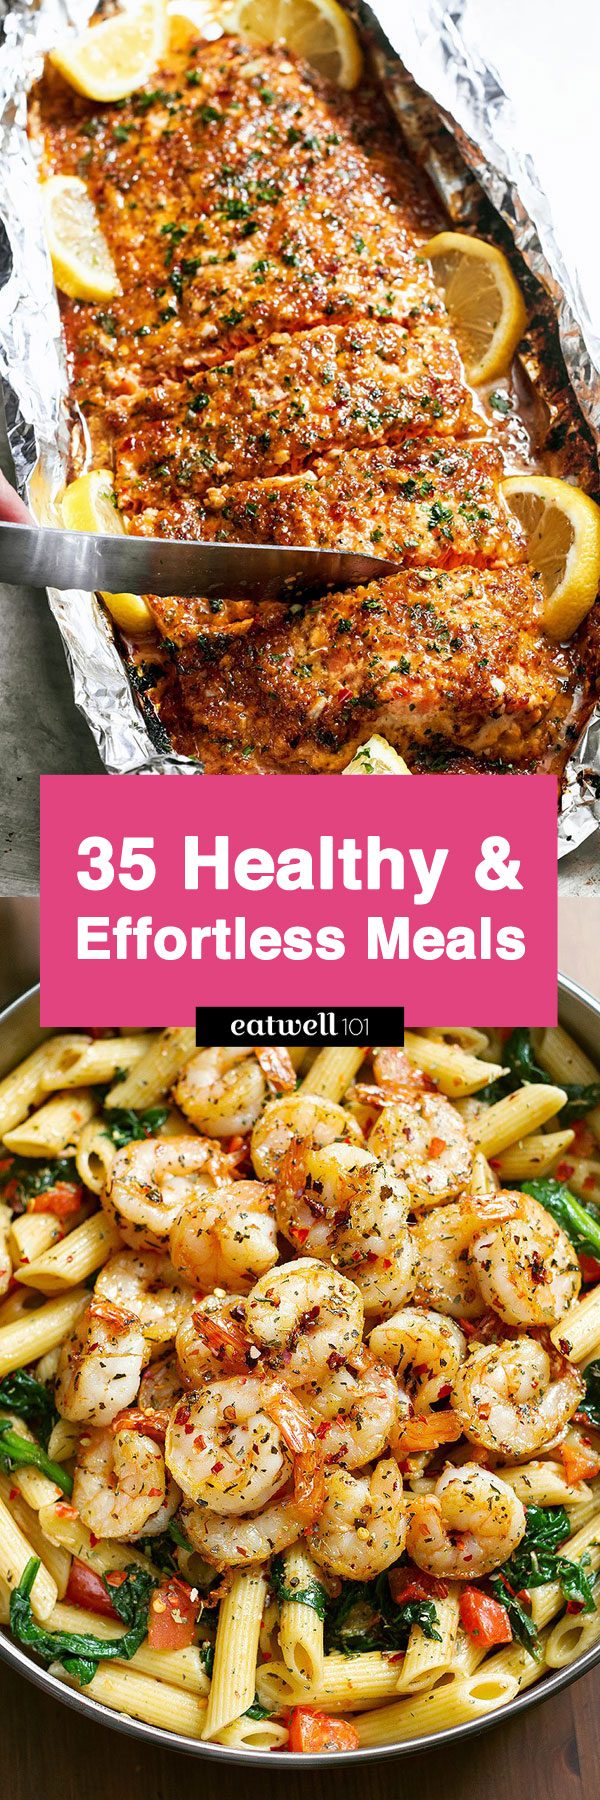 https://www.eatwell101.com/wp-content/uploads/2016/08/35-low-effort-healthy-meal-recipes.jpg